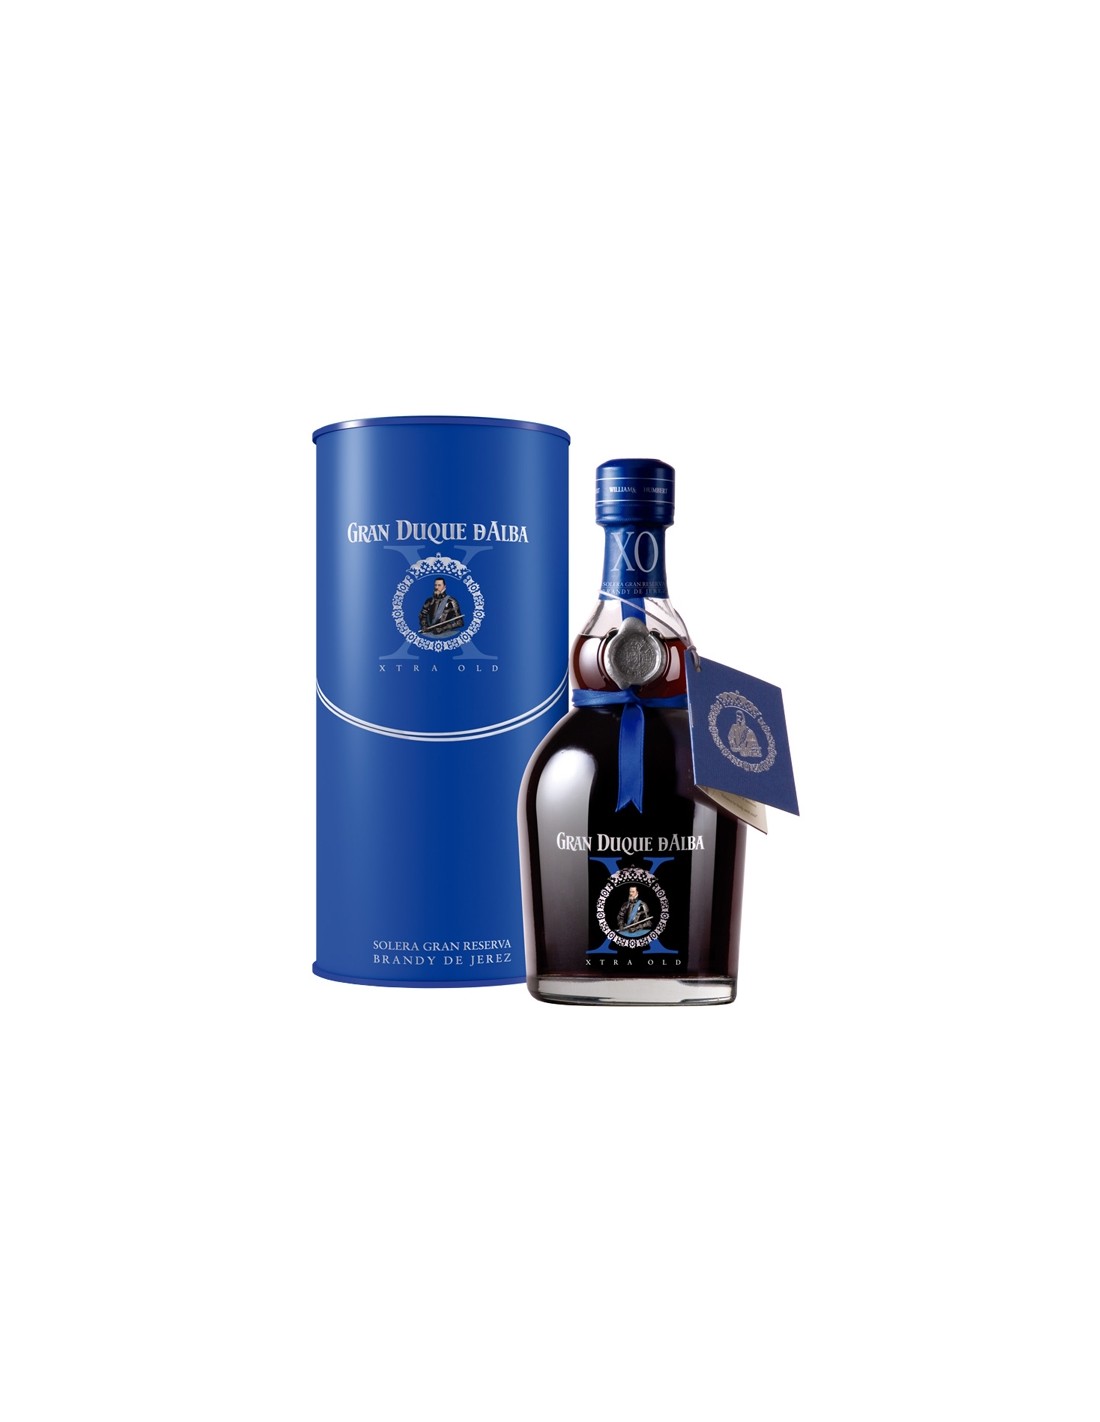 Brandy Gran Duque D`Alba XO 40% alc., 0.7L, Spania alcooldiscount.ro